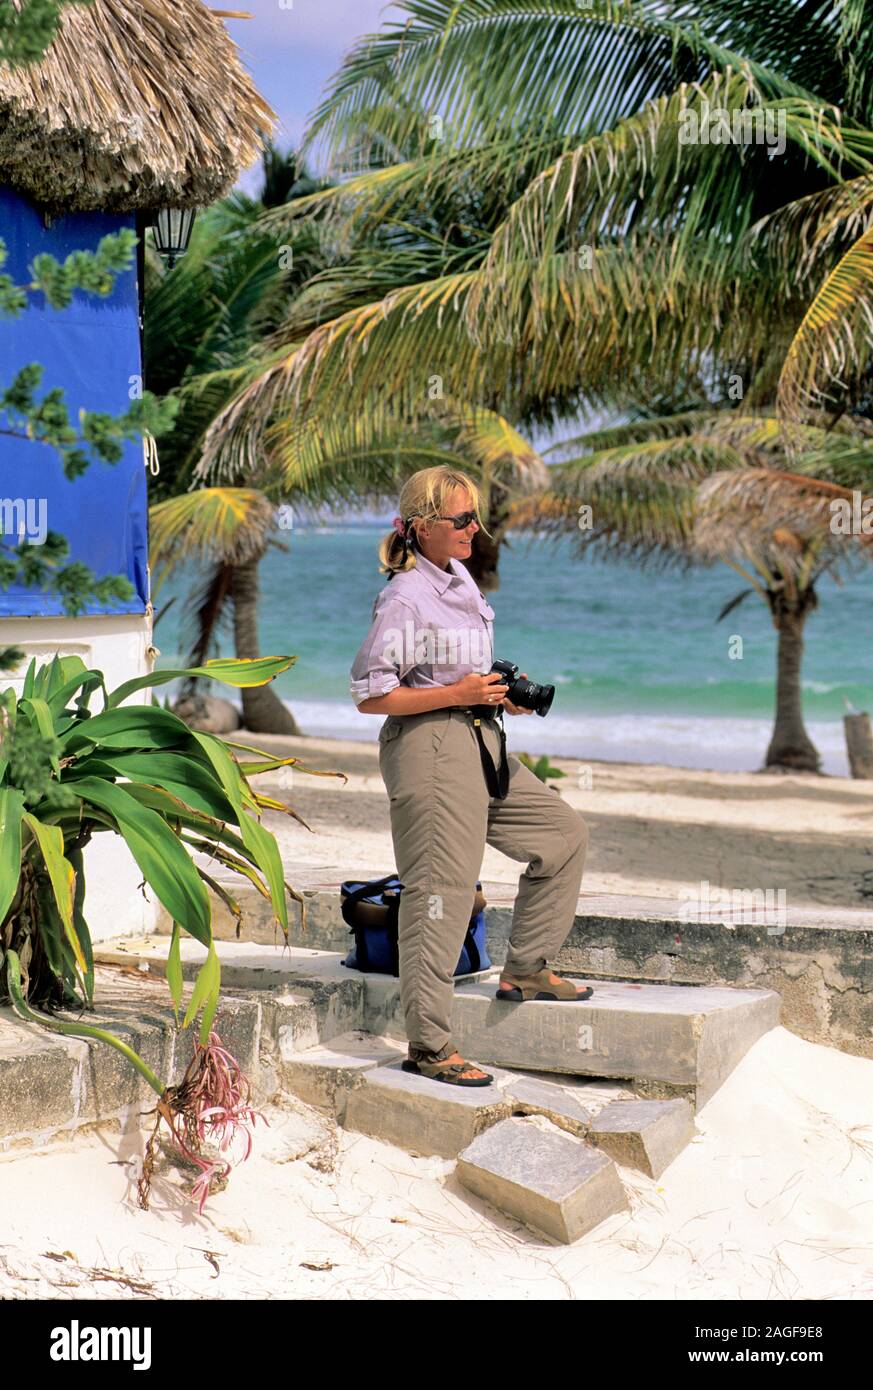 Women takes photos on a beach in Mexico Stock Photo